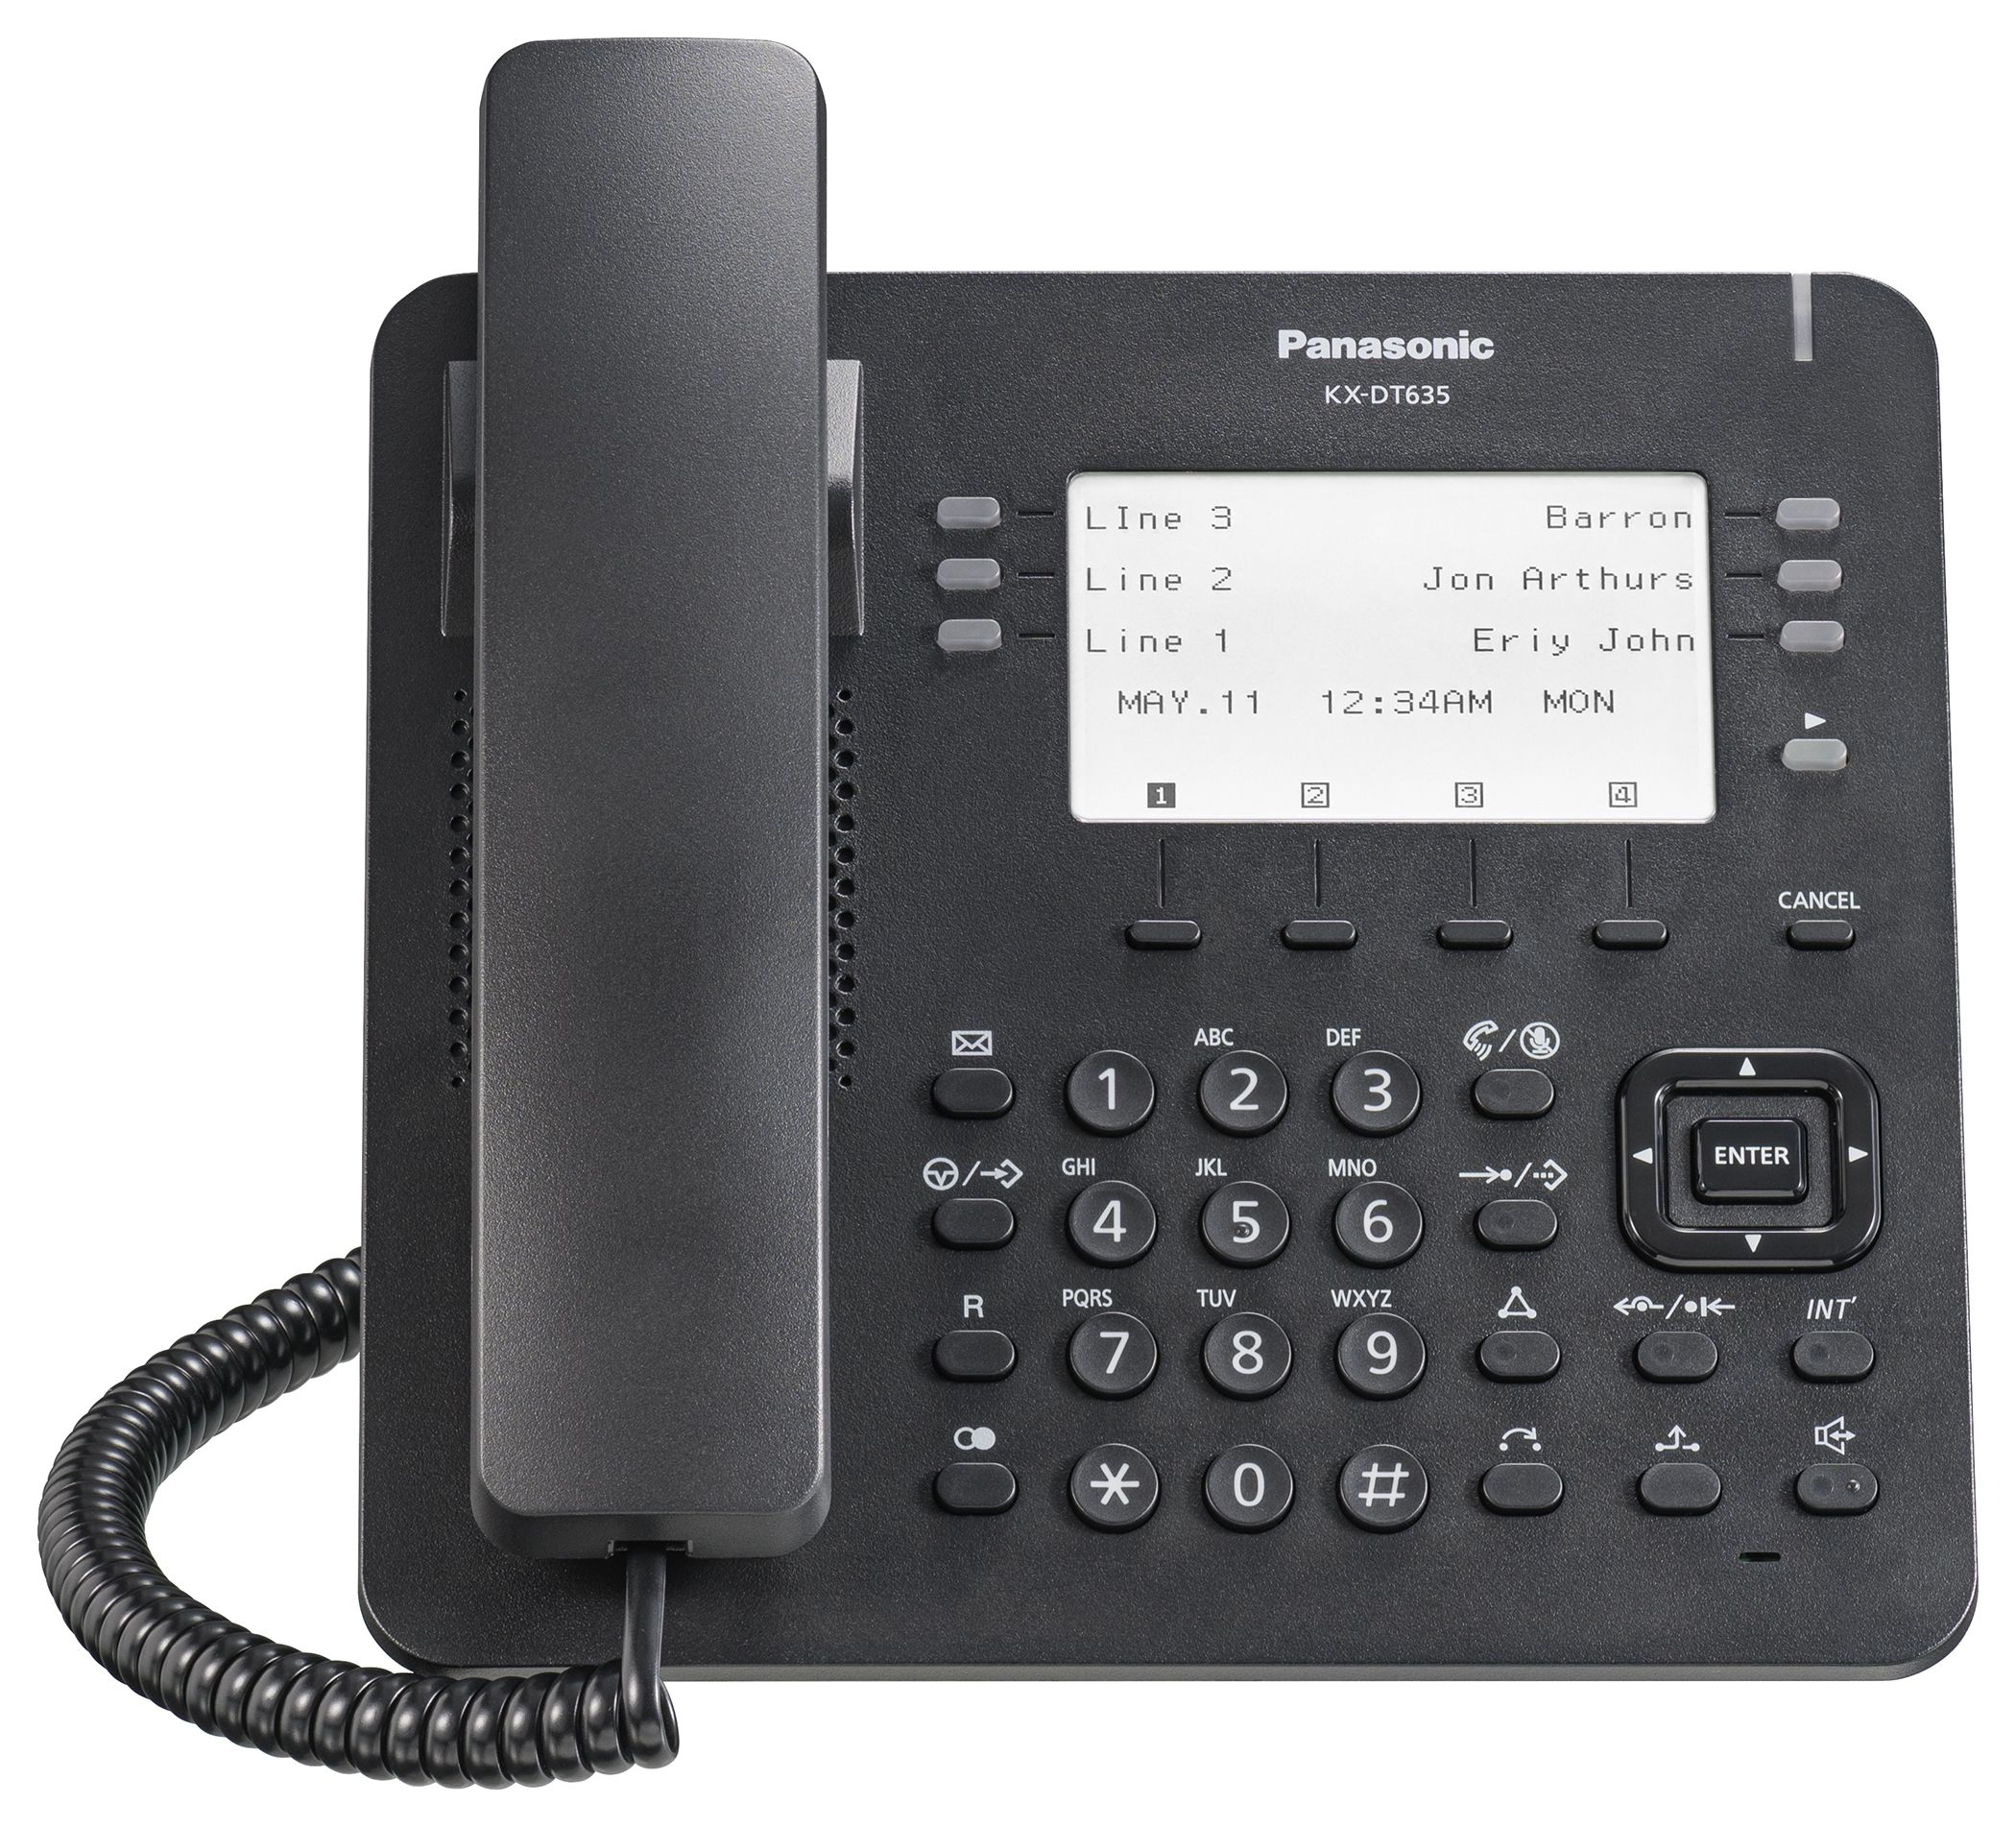 Panasonic KX-DT635 - Preto